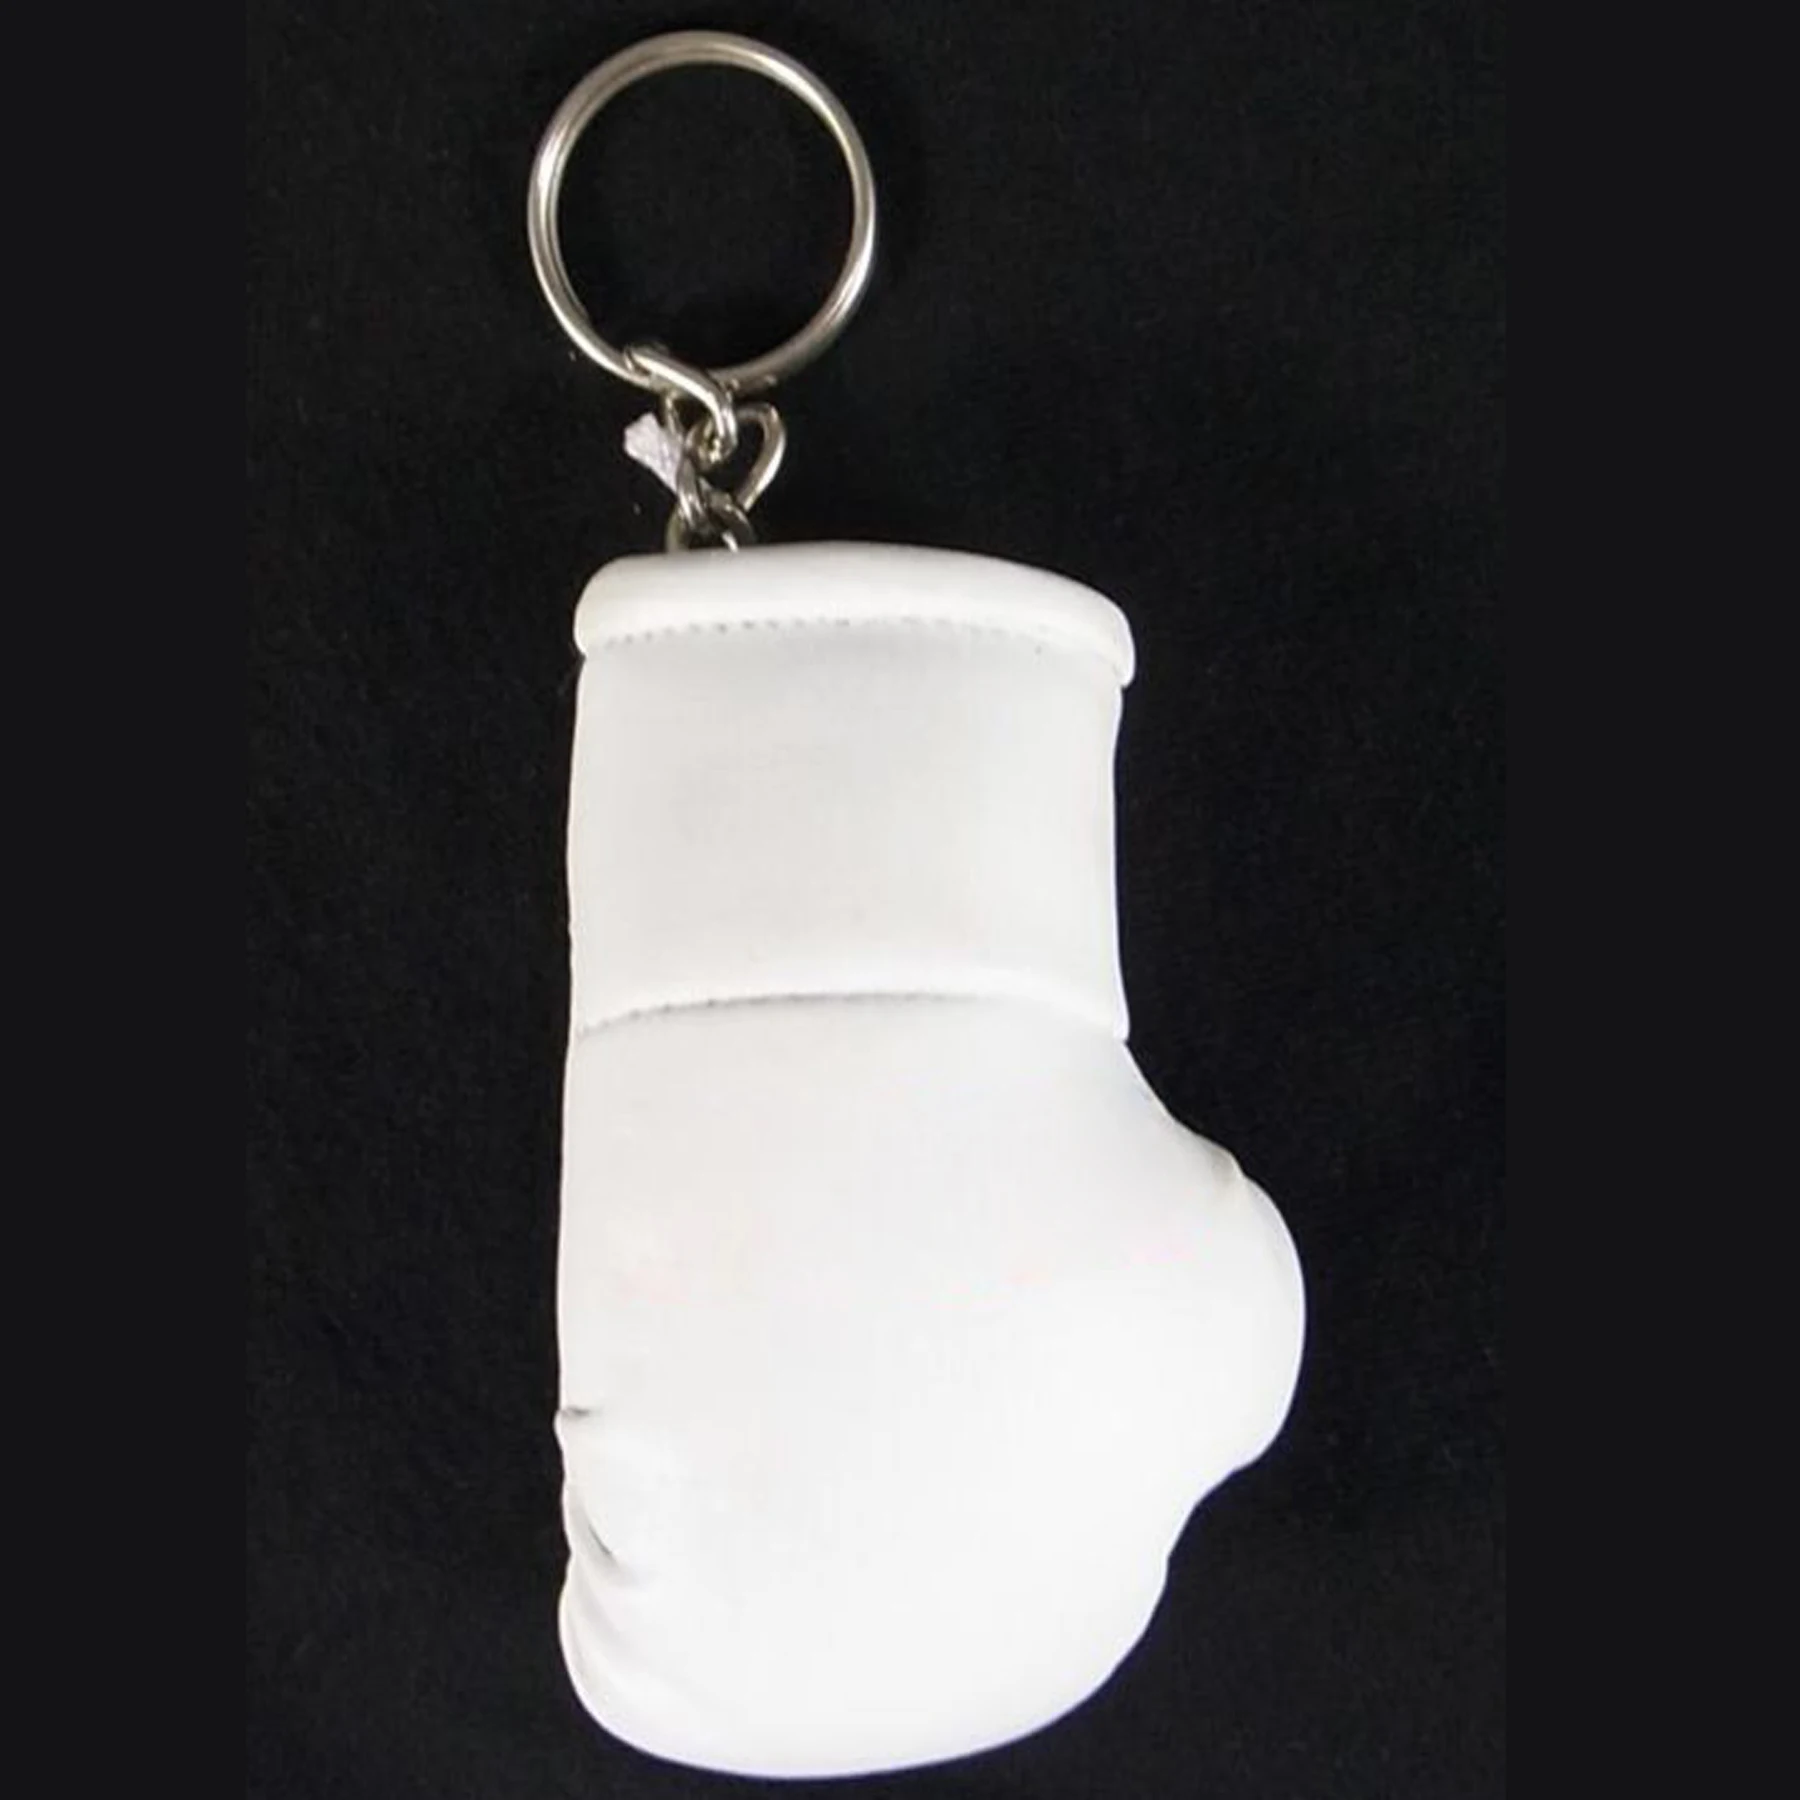 Keychain Mini boxing gloves key chain ring flag key ring cute montenegro 